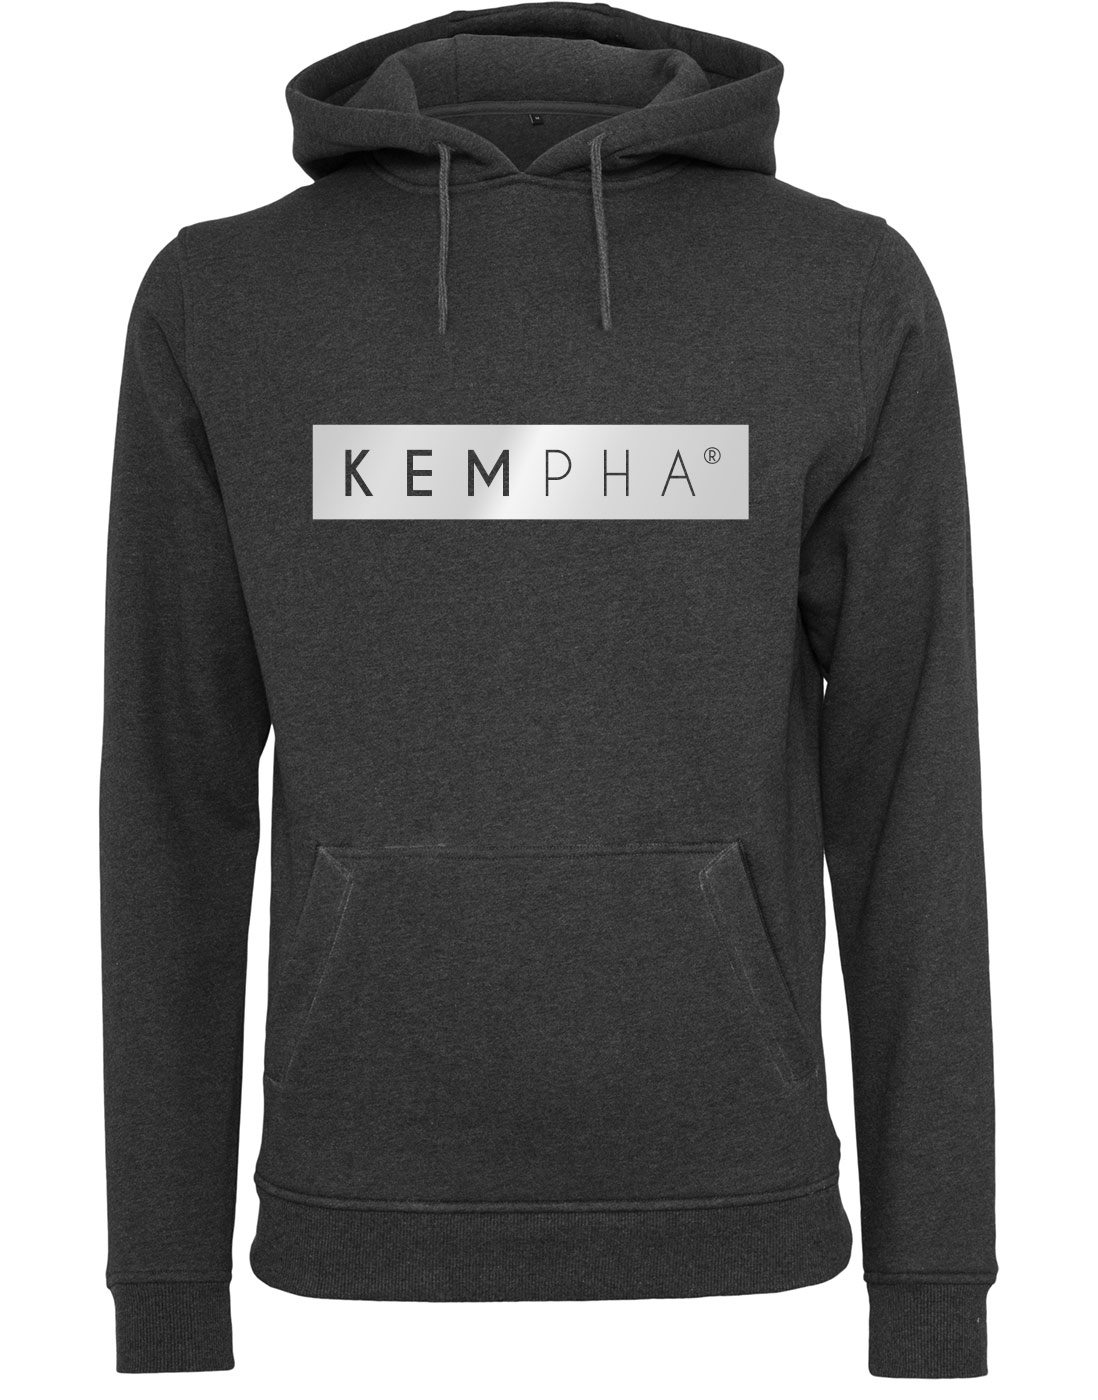 Kempha Premium Hoodie silber auf charcoal heather